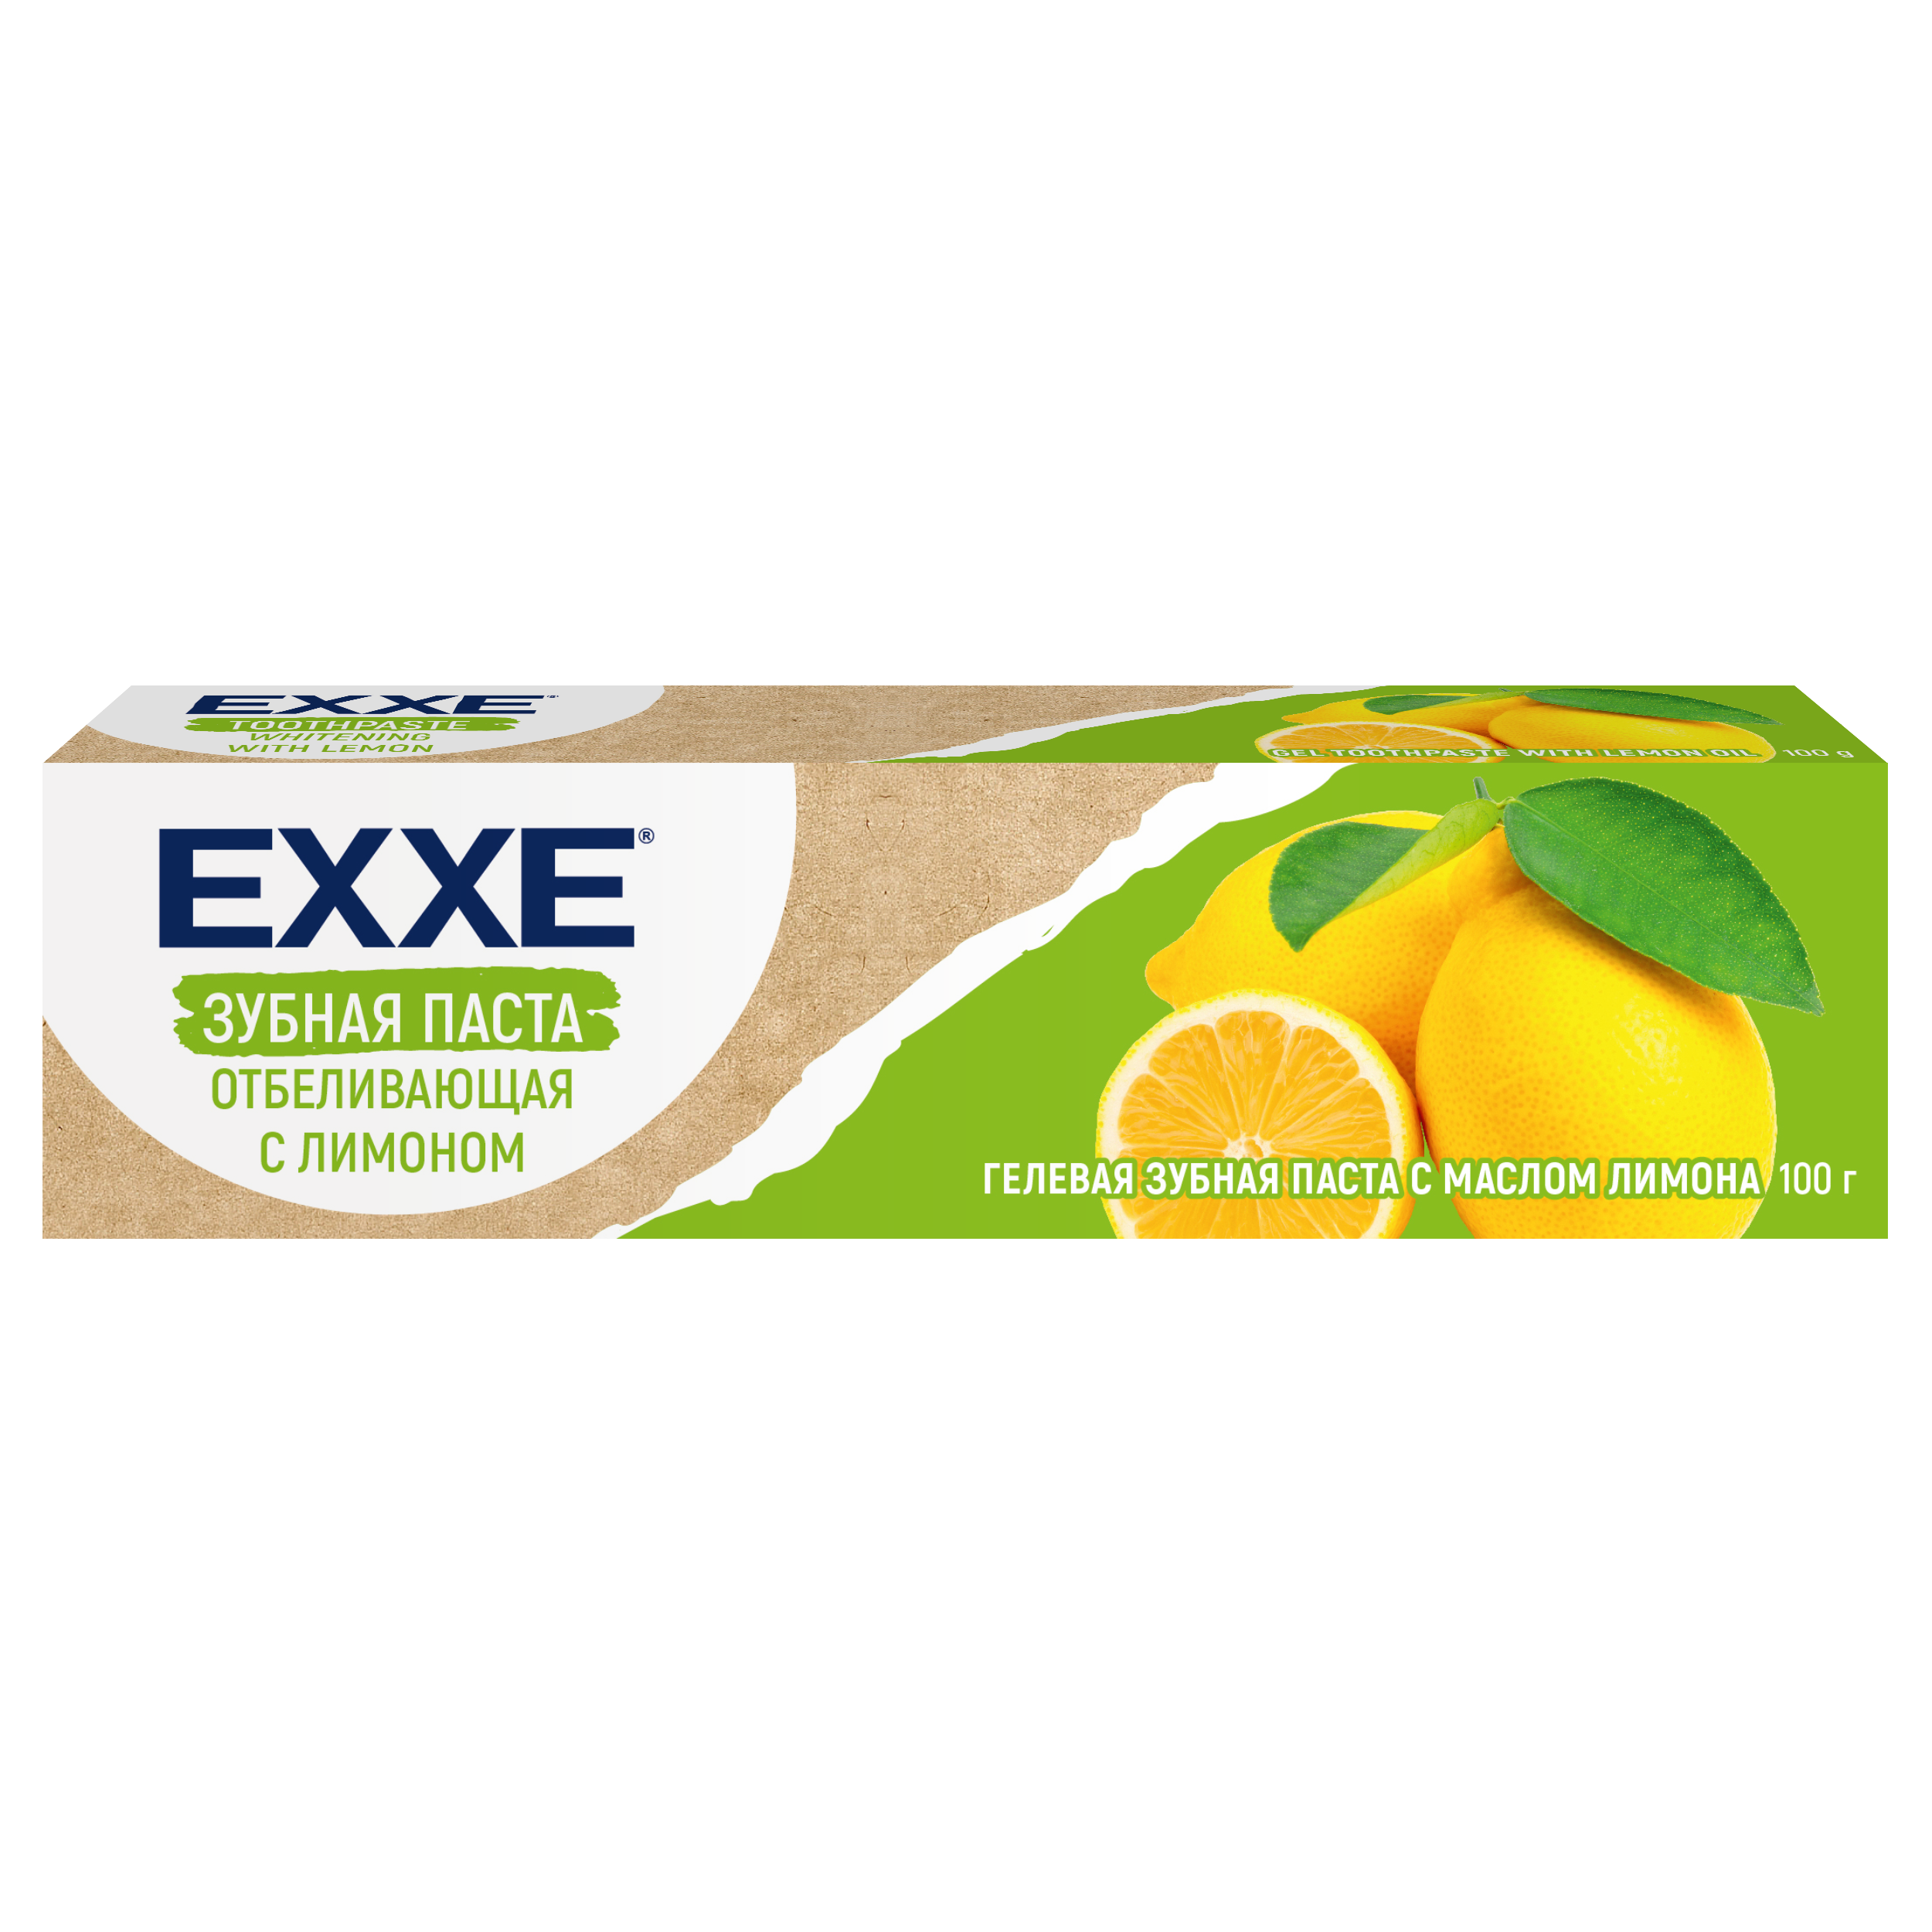 Зубная паста Exxe Отбеливающая с лимоном, 100 г endro органическая зубная паста с лимоном endro lemon toothpaste 150